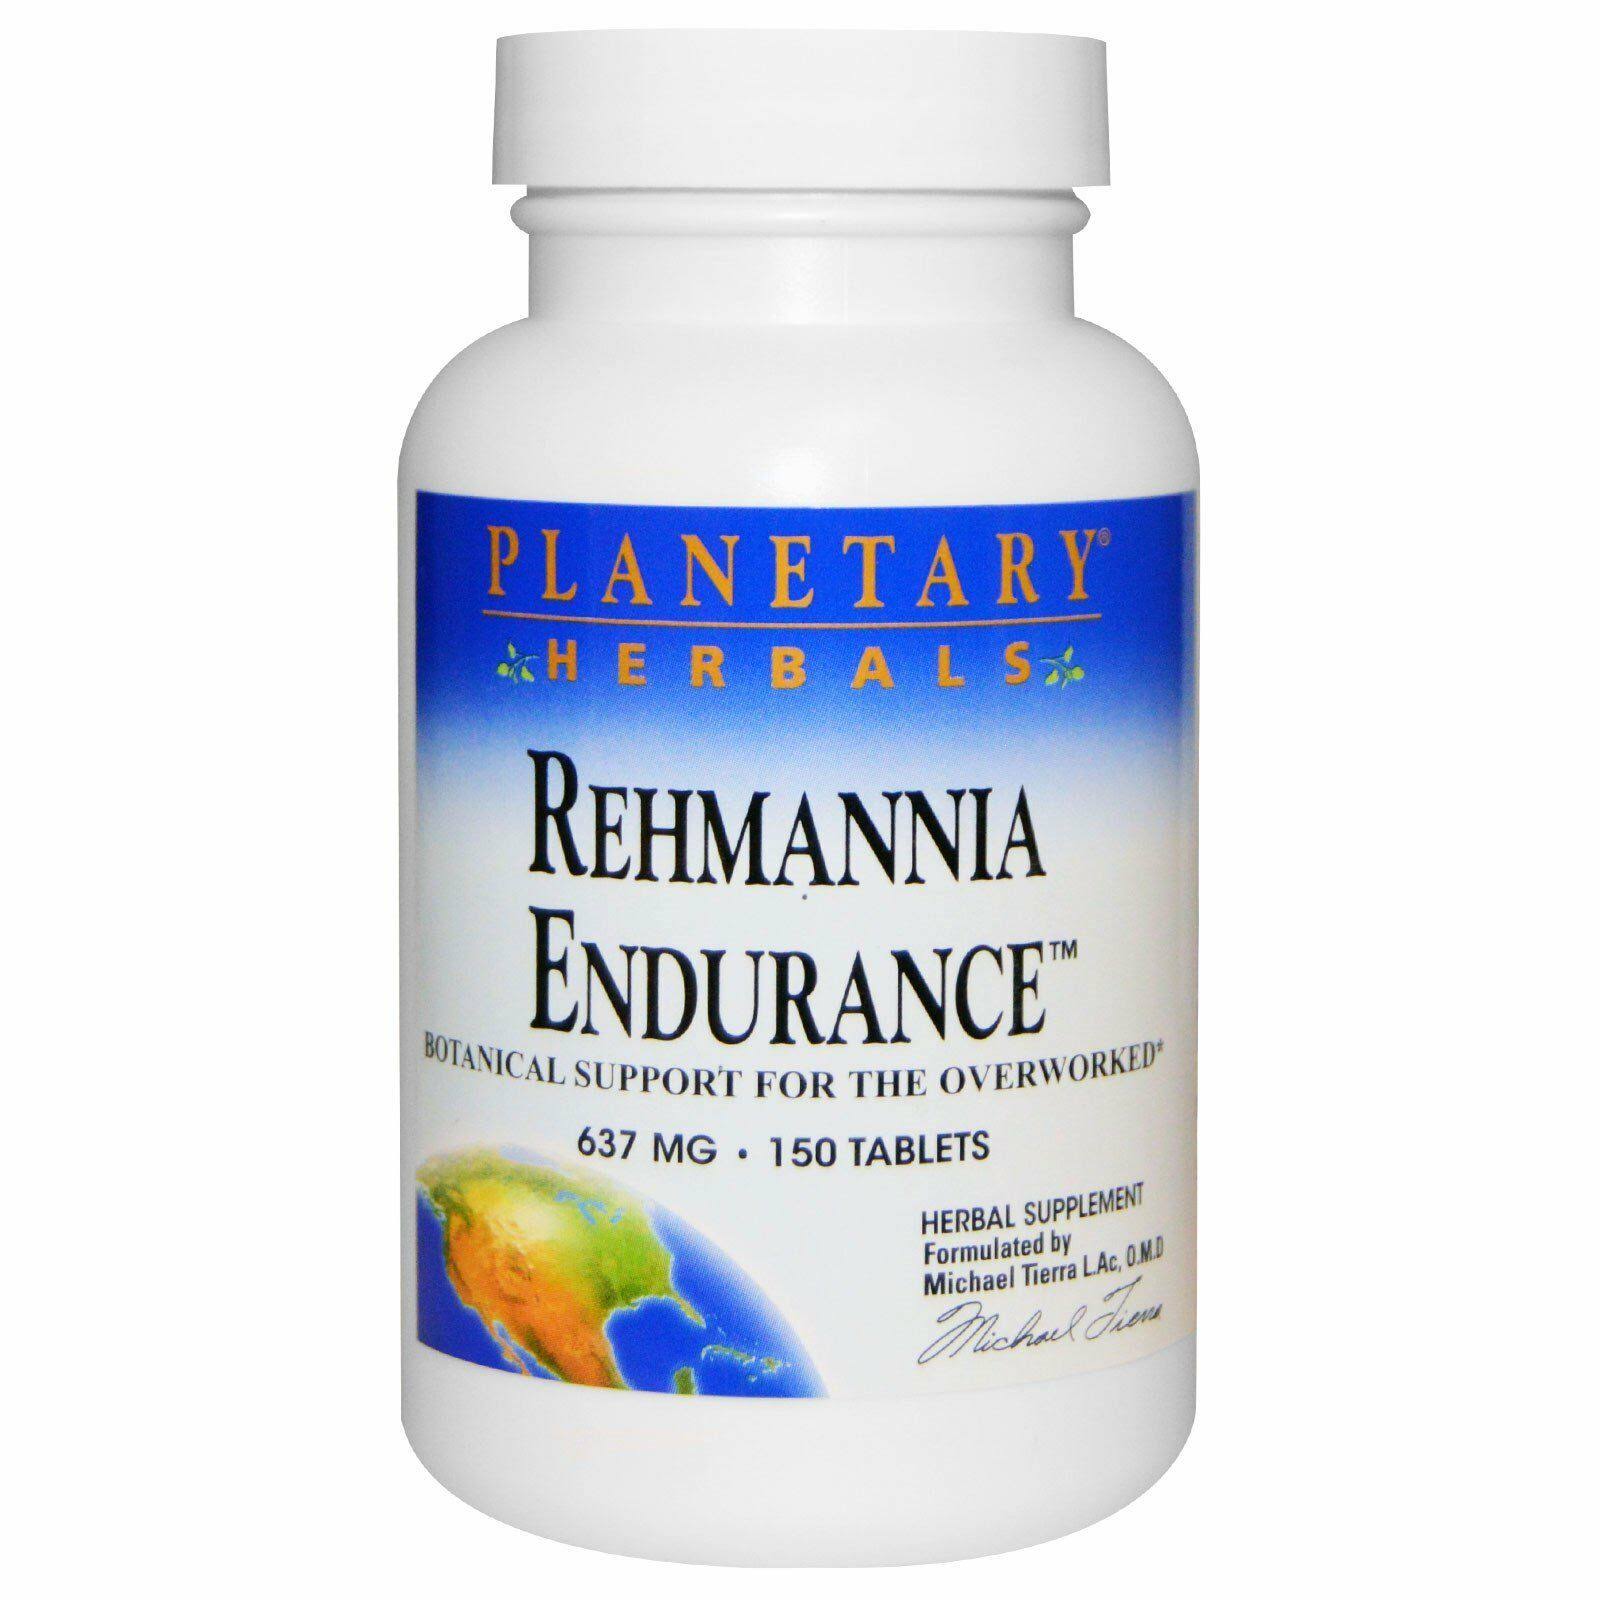 Planetary Herbals Rehmannia Endurance Herbal Supplement - 150 Tablets